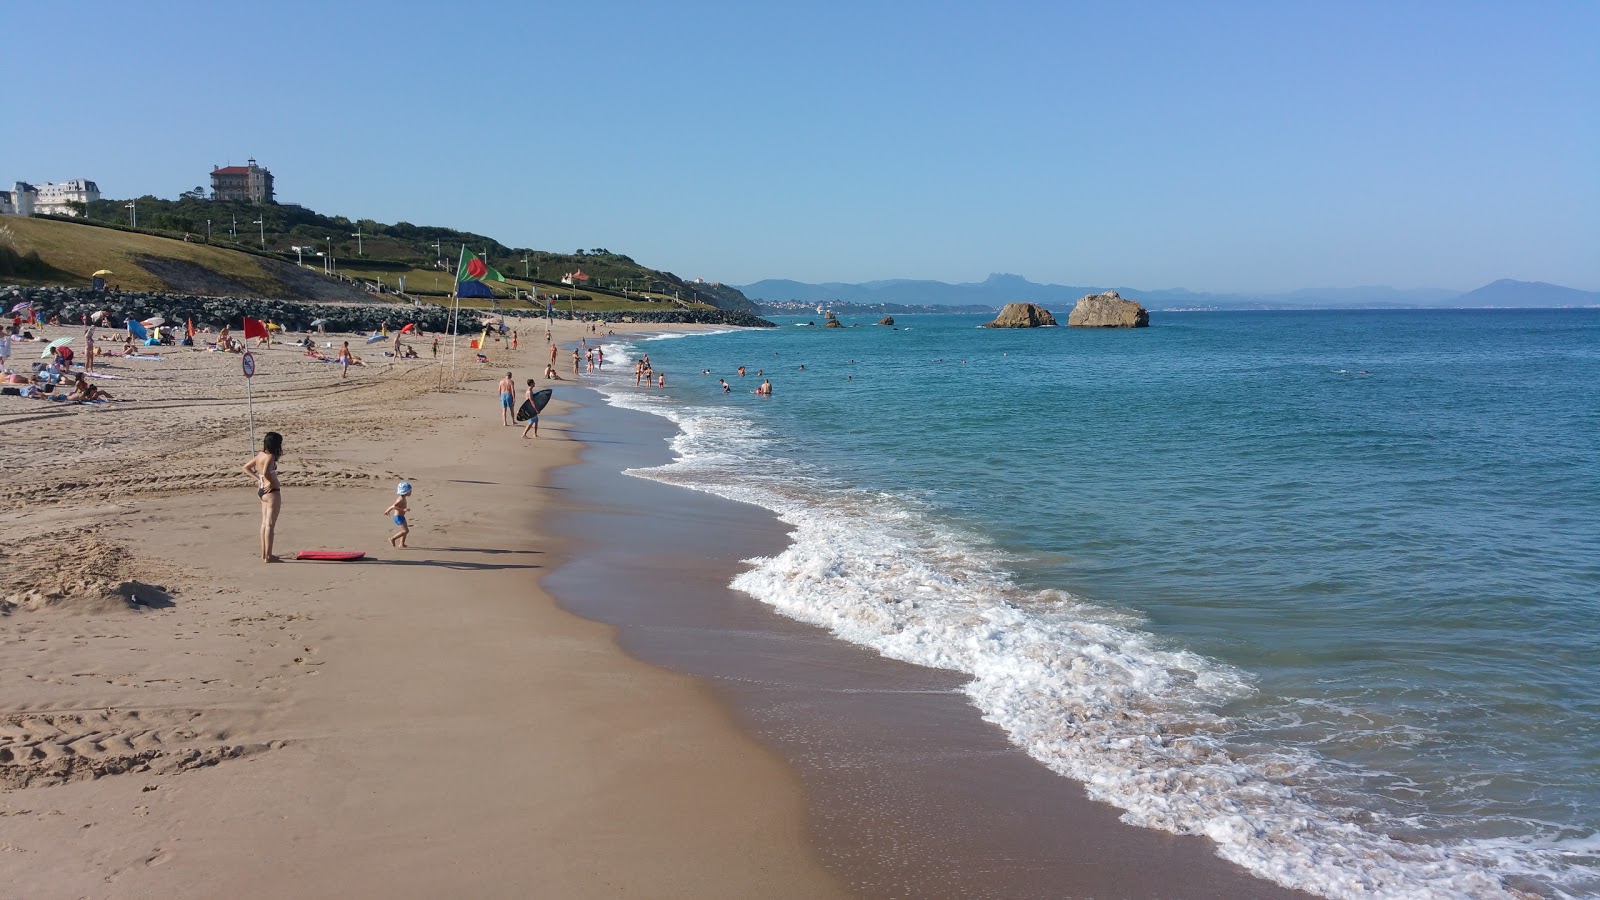 Foto de Praia Milady - lugar popular entre os apreciadores de relaxamento